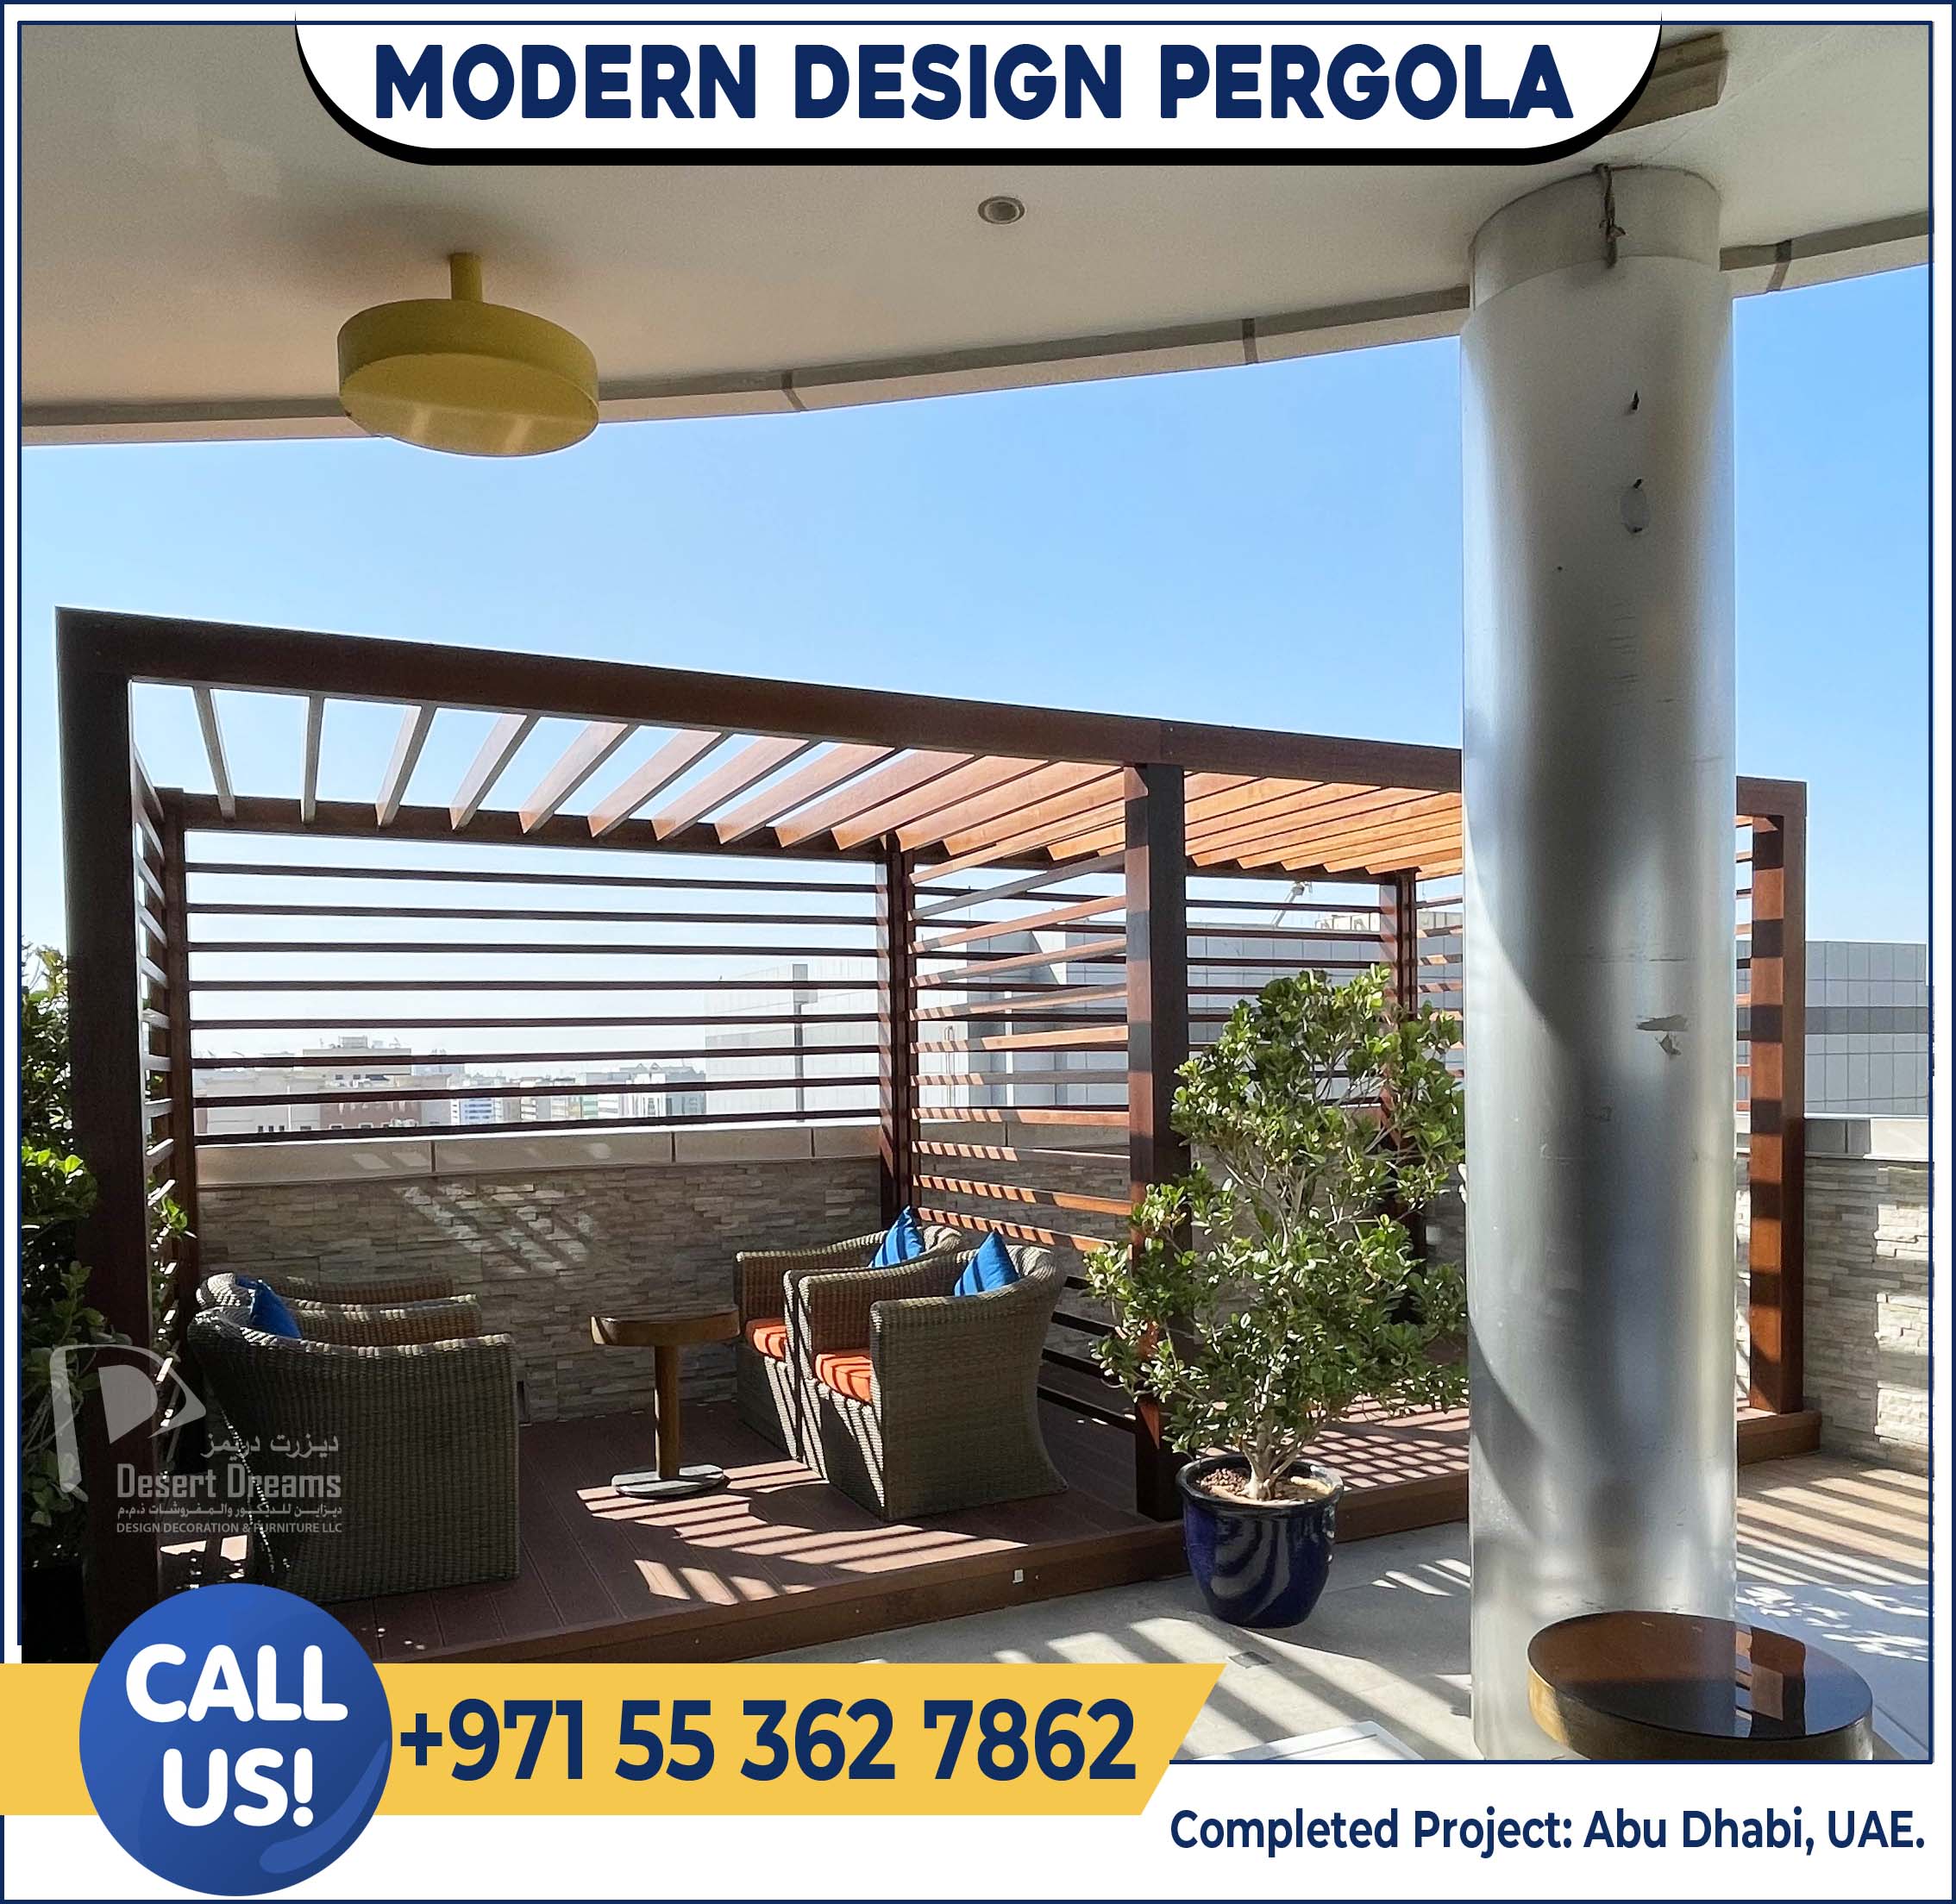 Modern Design Pergola in UAE.jpg